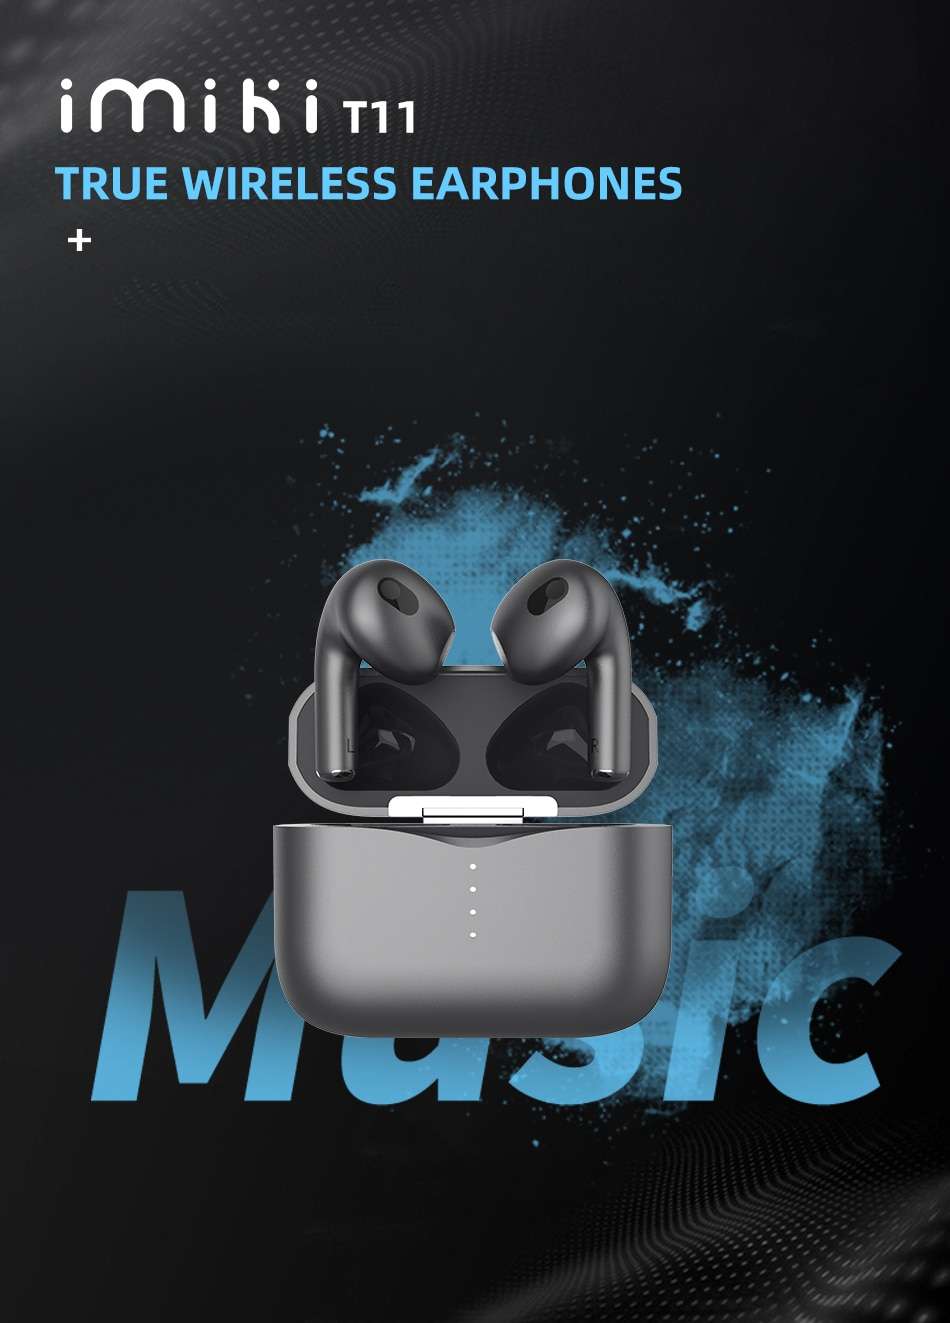 Original IMILAB IMIKI T11 True Wireless Earbuds